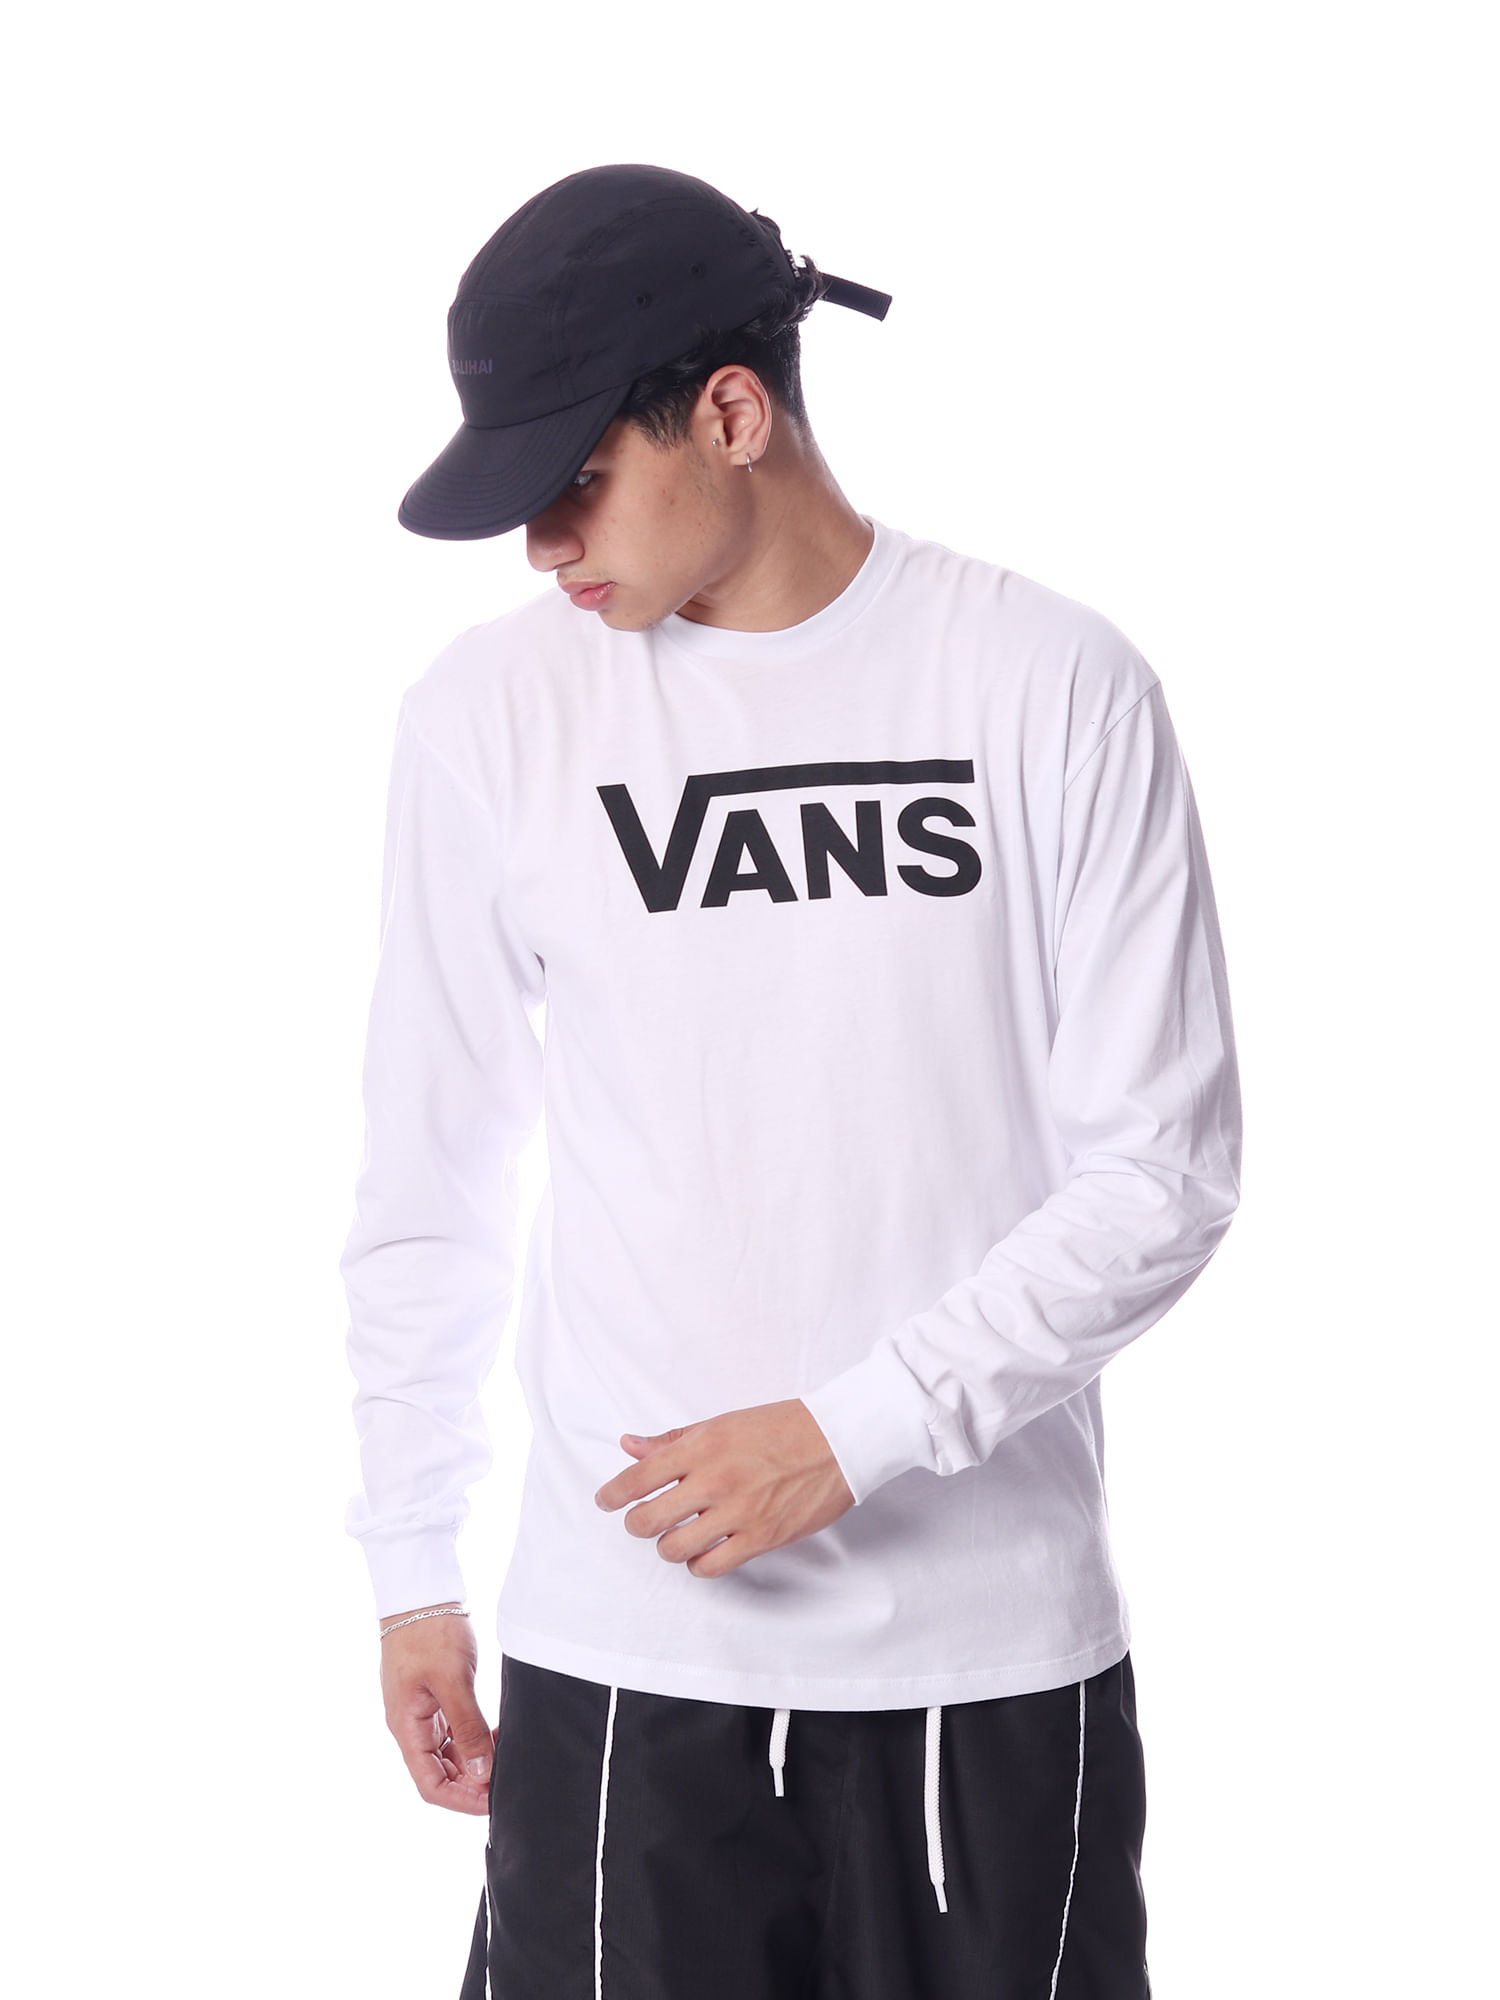 Camiseta-vans-white-black-White-P